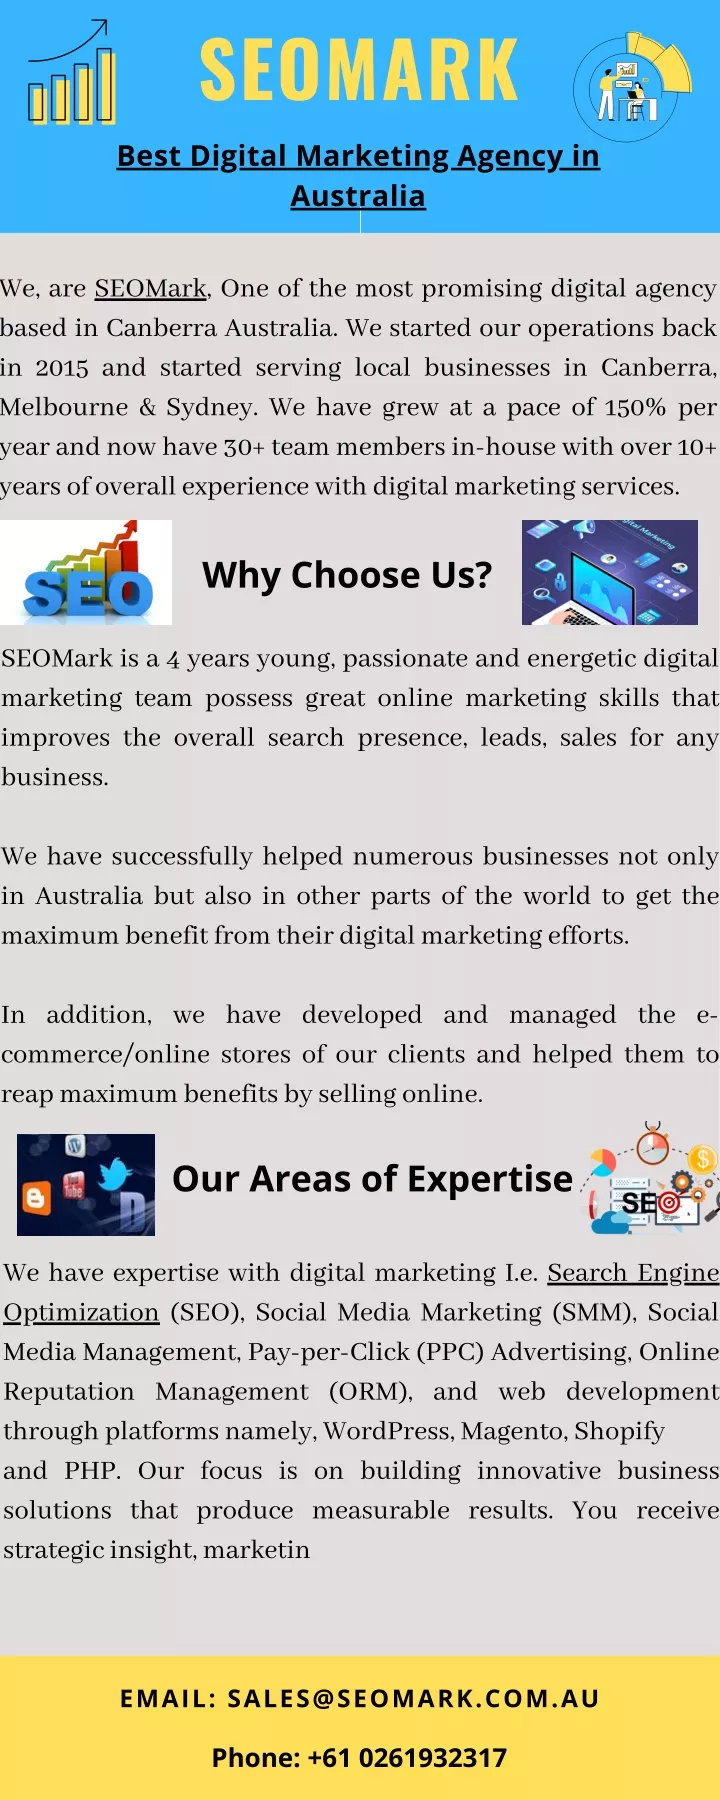 seomark best digital marketing agency in australia